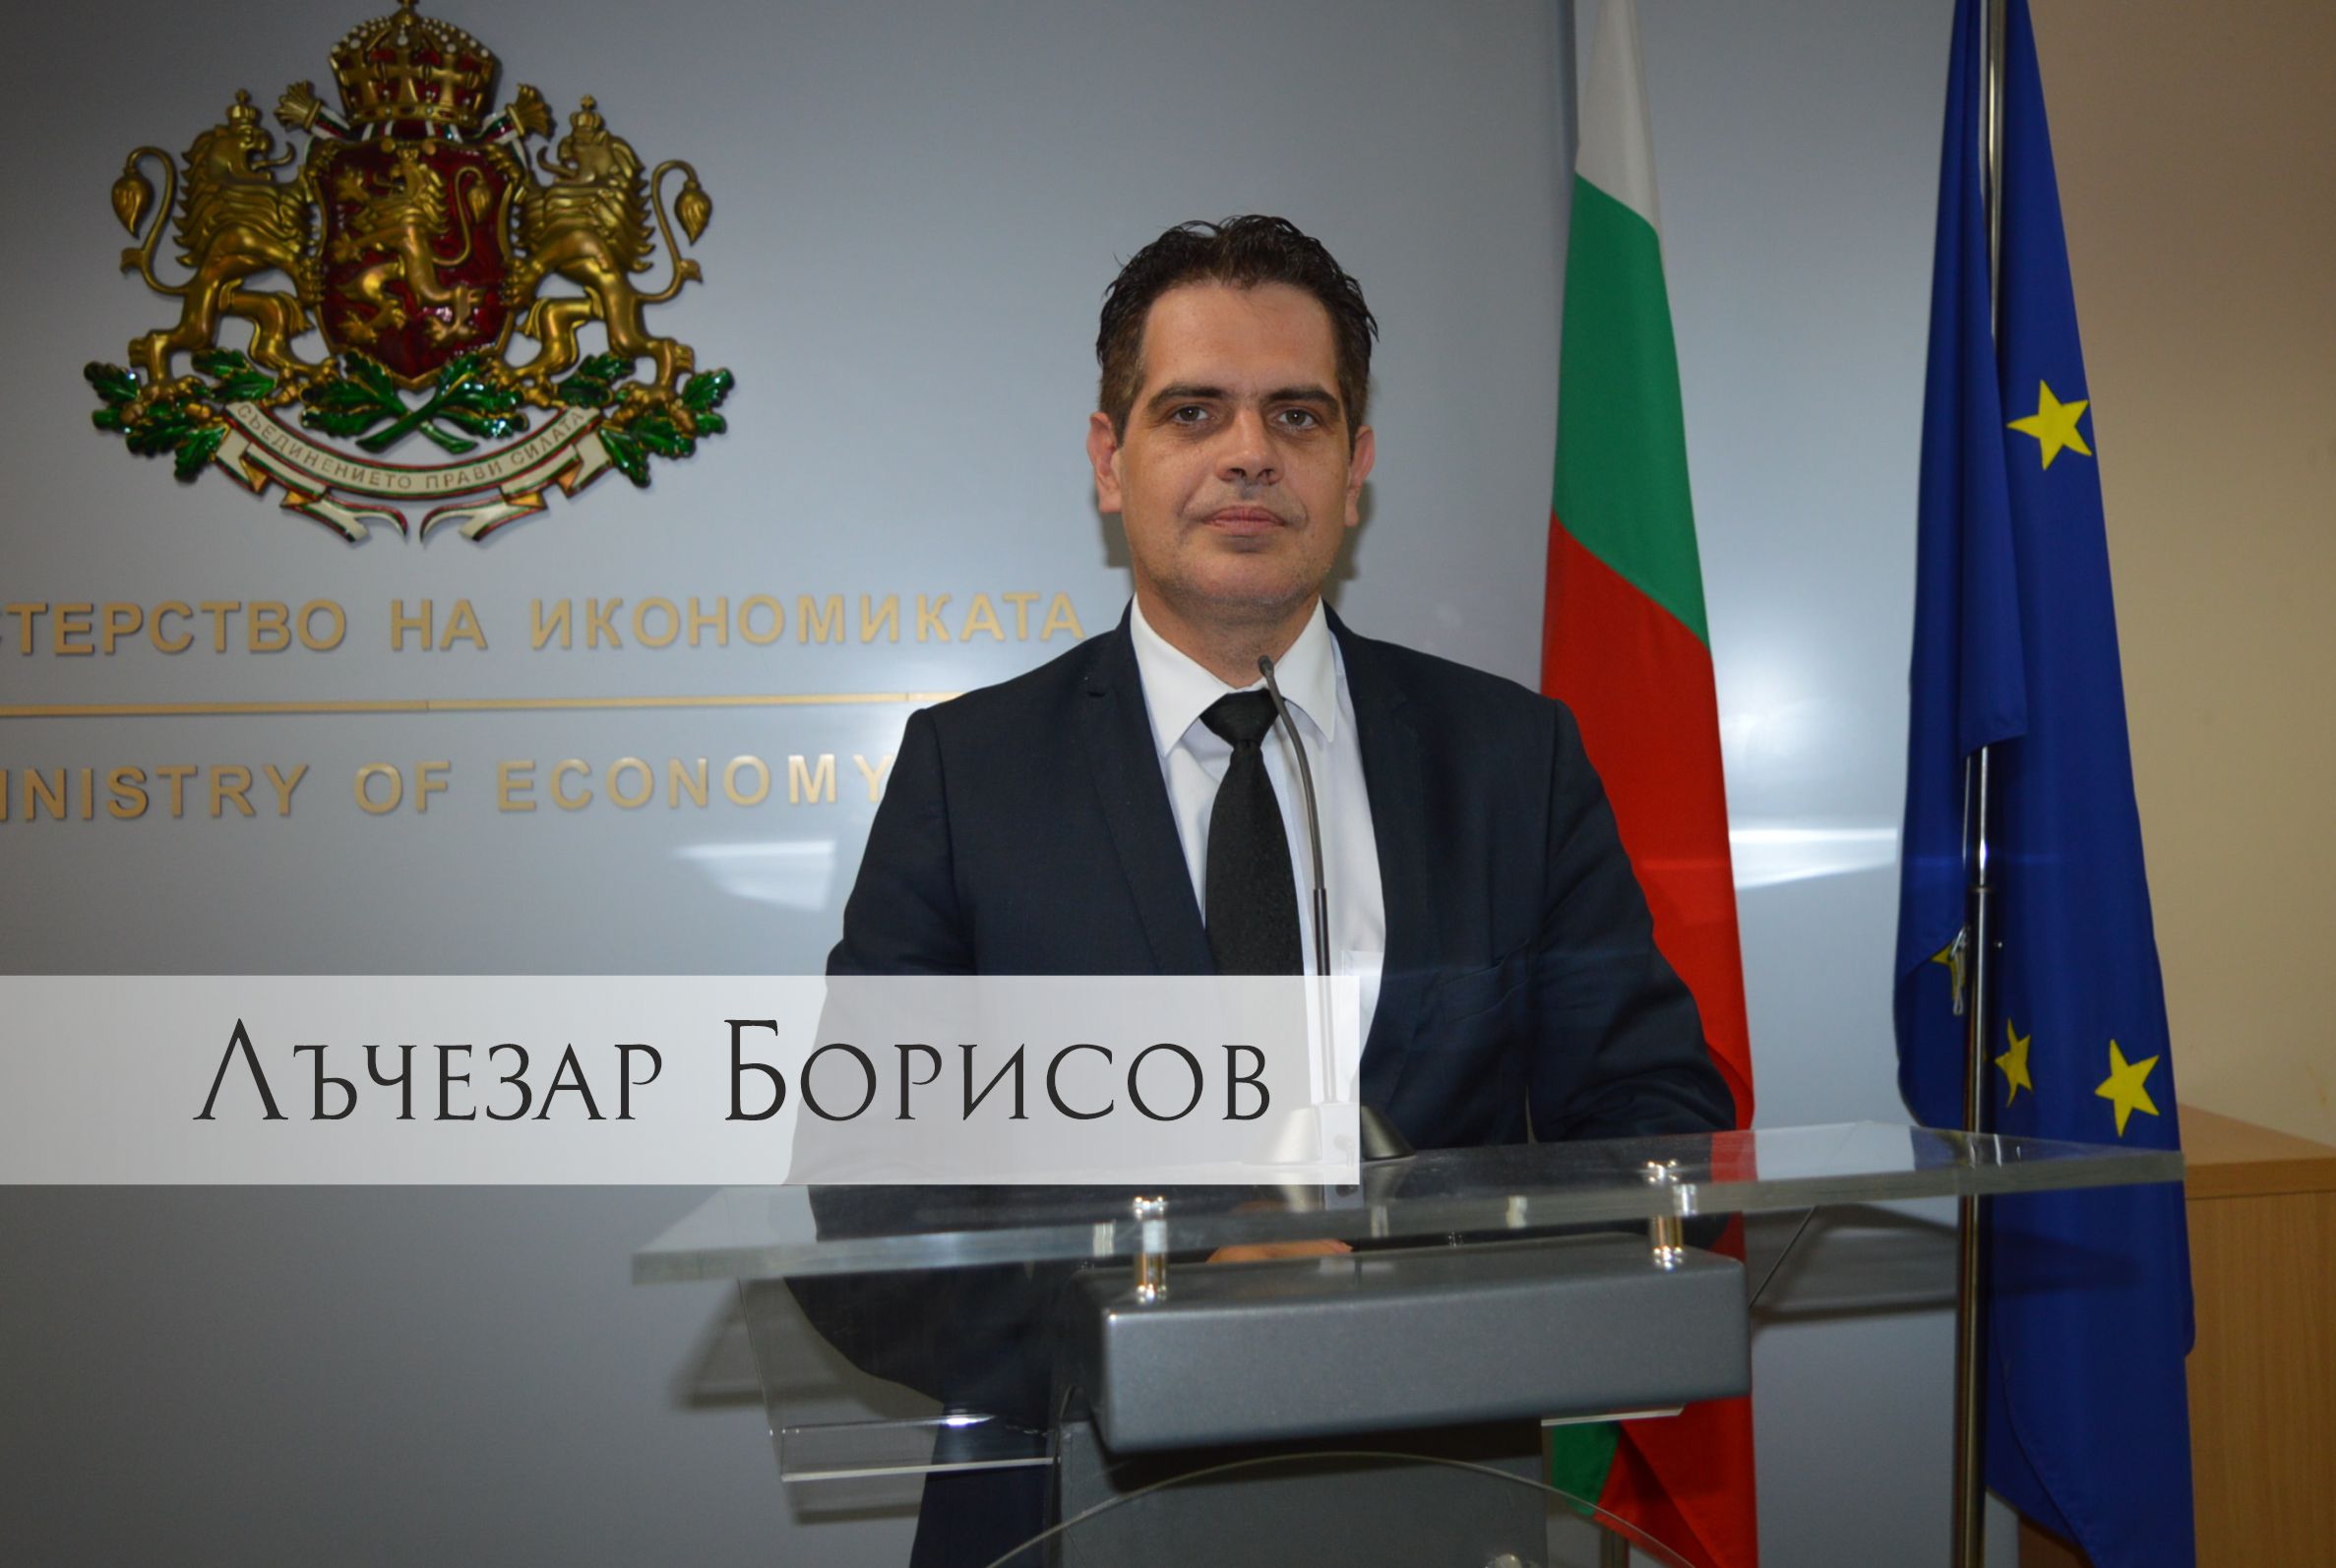 Lachezar Borissov, Minister оf Economy: The Current Crisis Is A Chance To Transform Our Economy